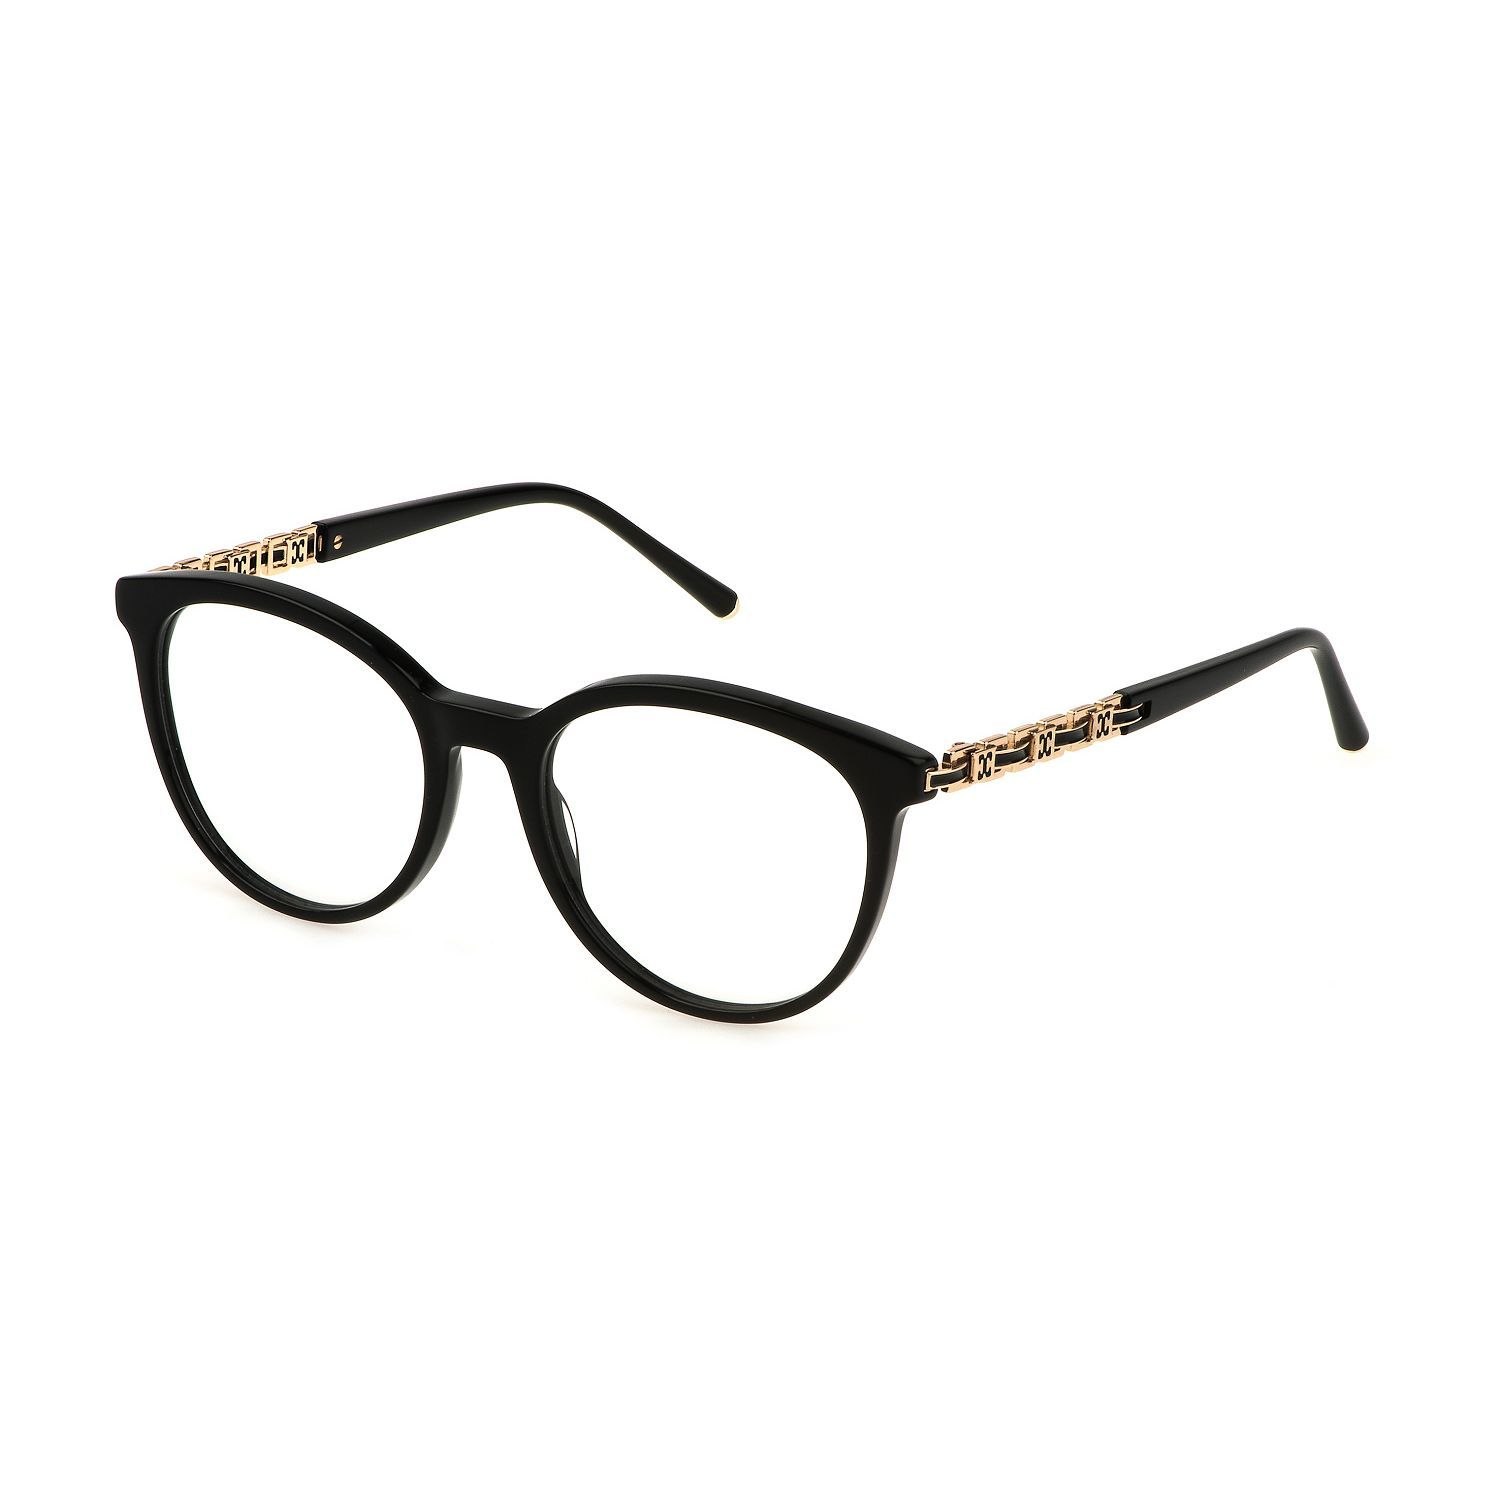 VESE07 Panthos Eyeglasses 0700 - size 52